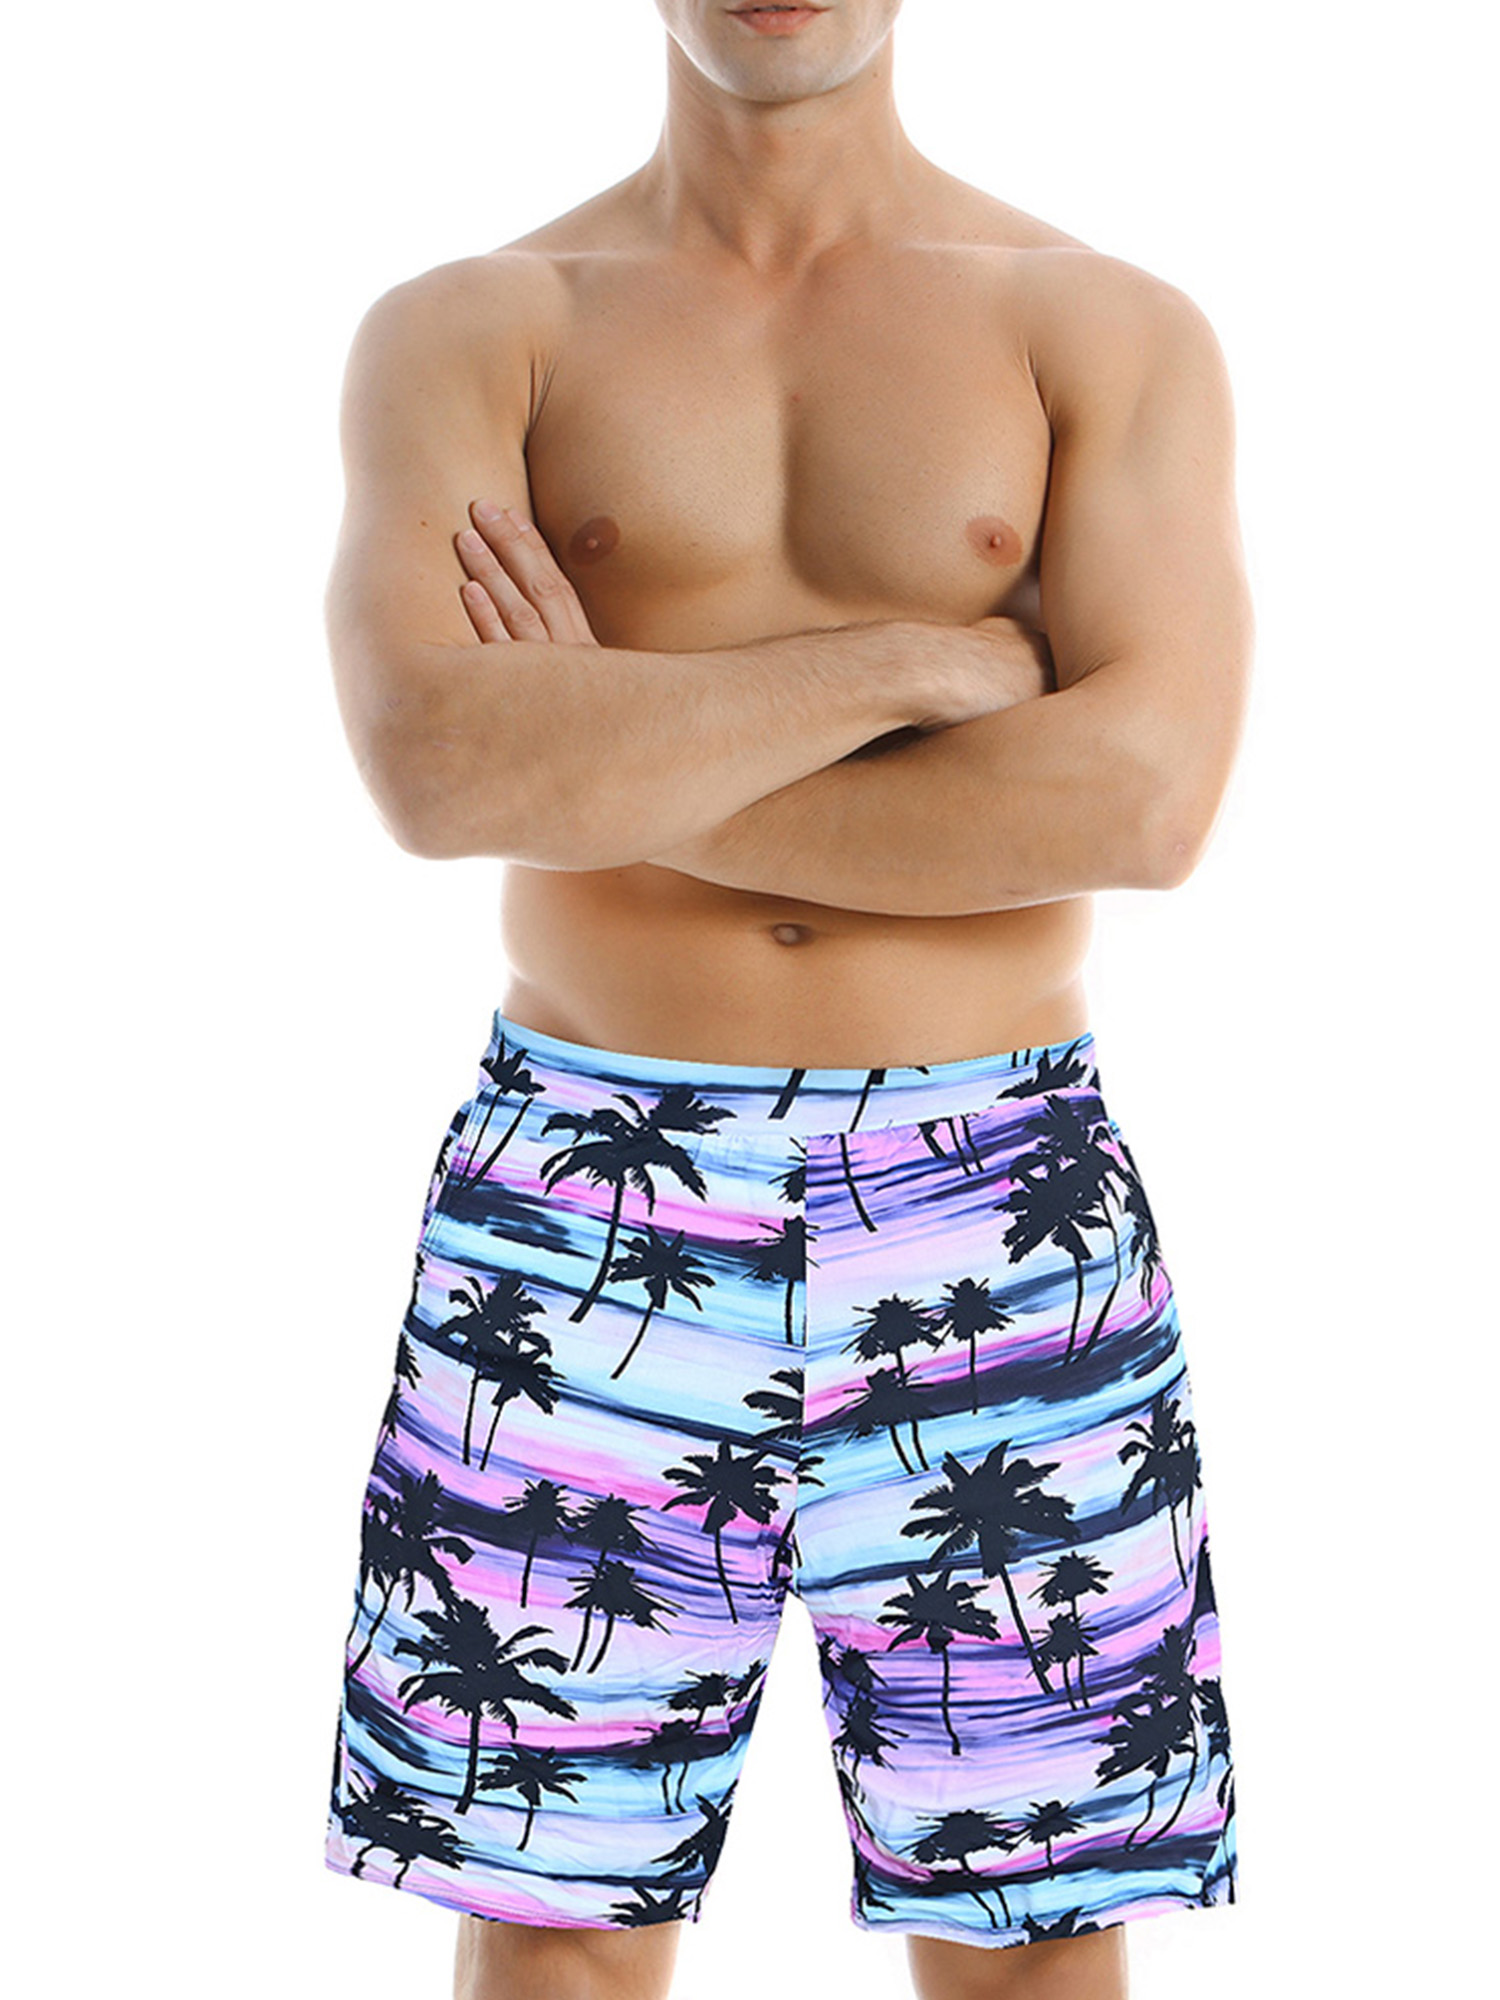 Boys Swimtrunks Quick-Dry Swim Shorts Casual Beach Shorts Pants Small Size